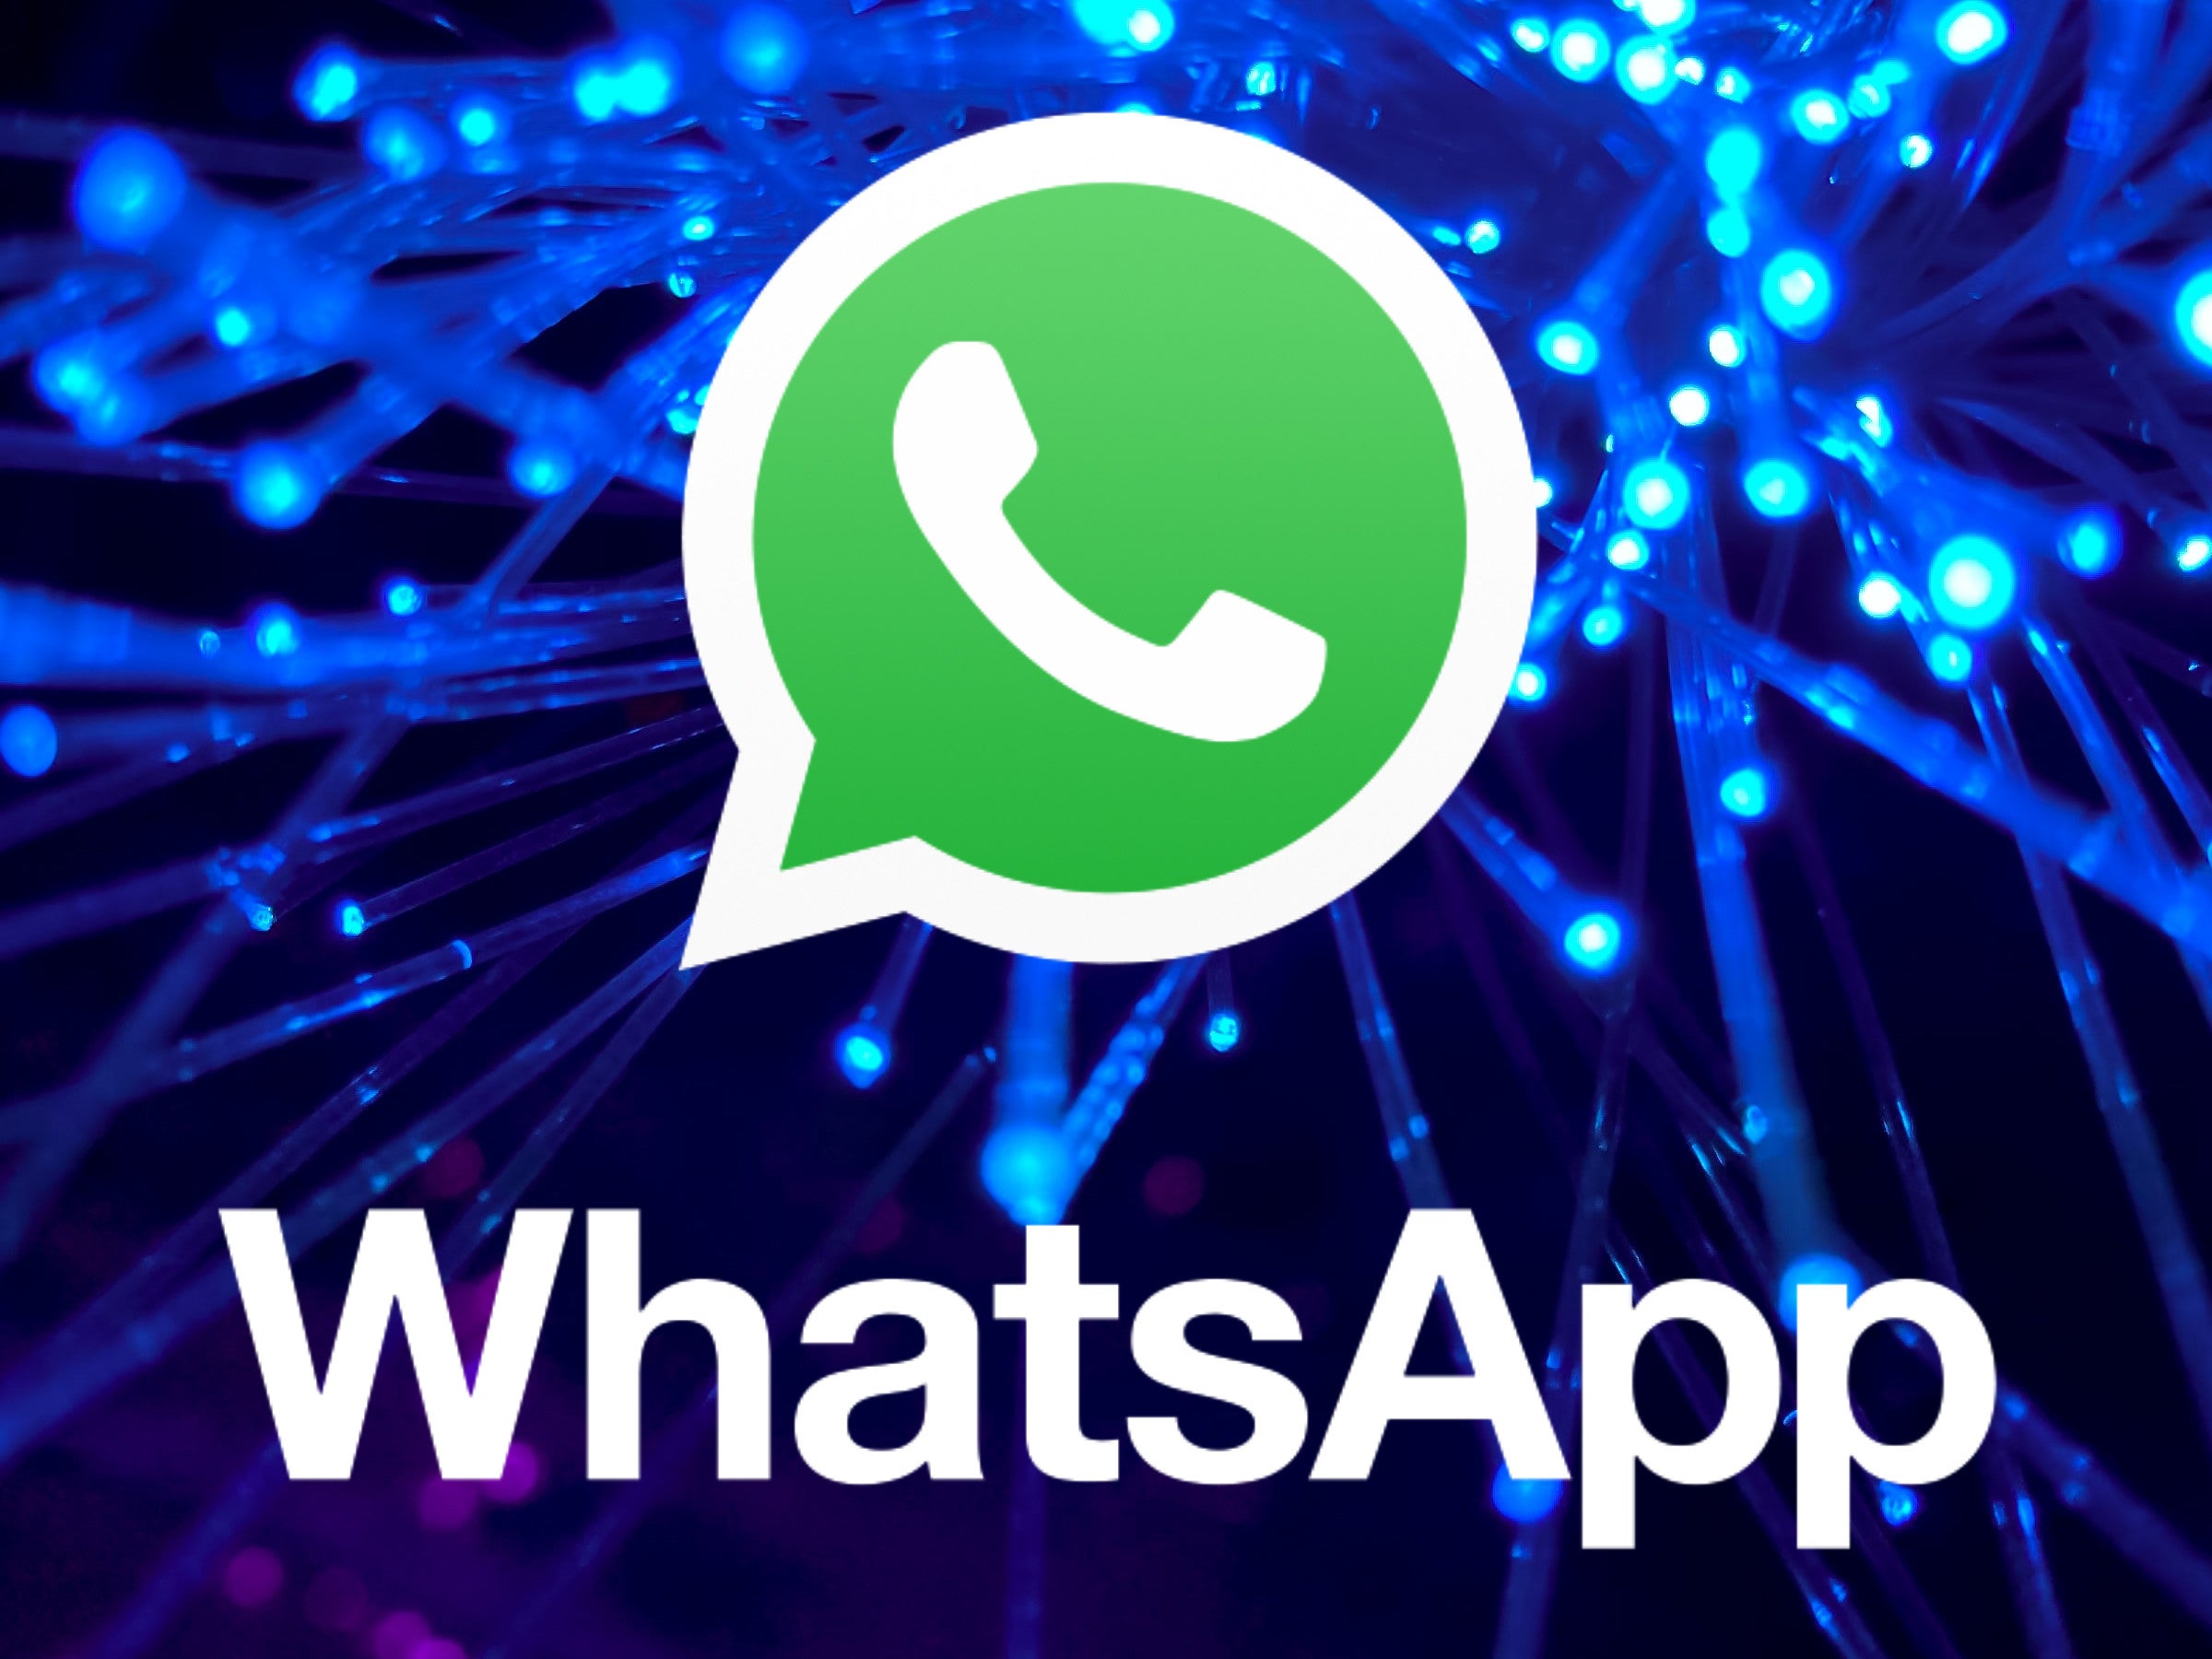 Whatsapp profilbilder kontakte unscharf